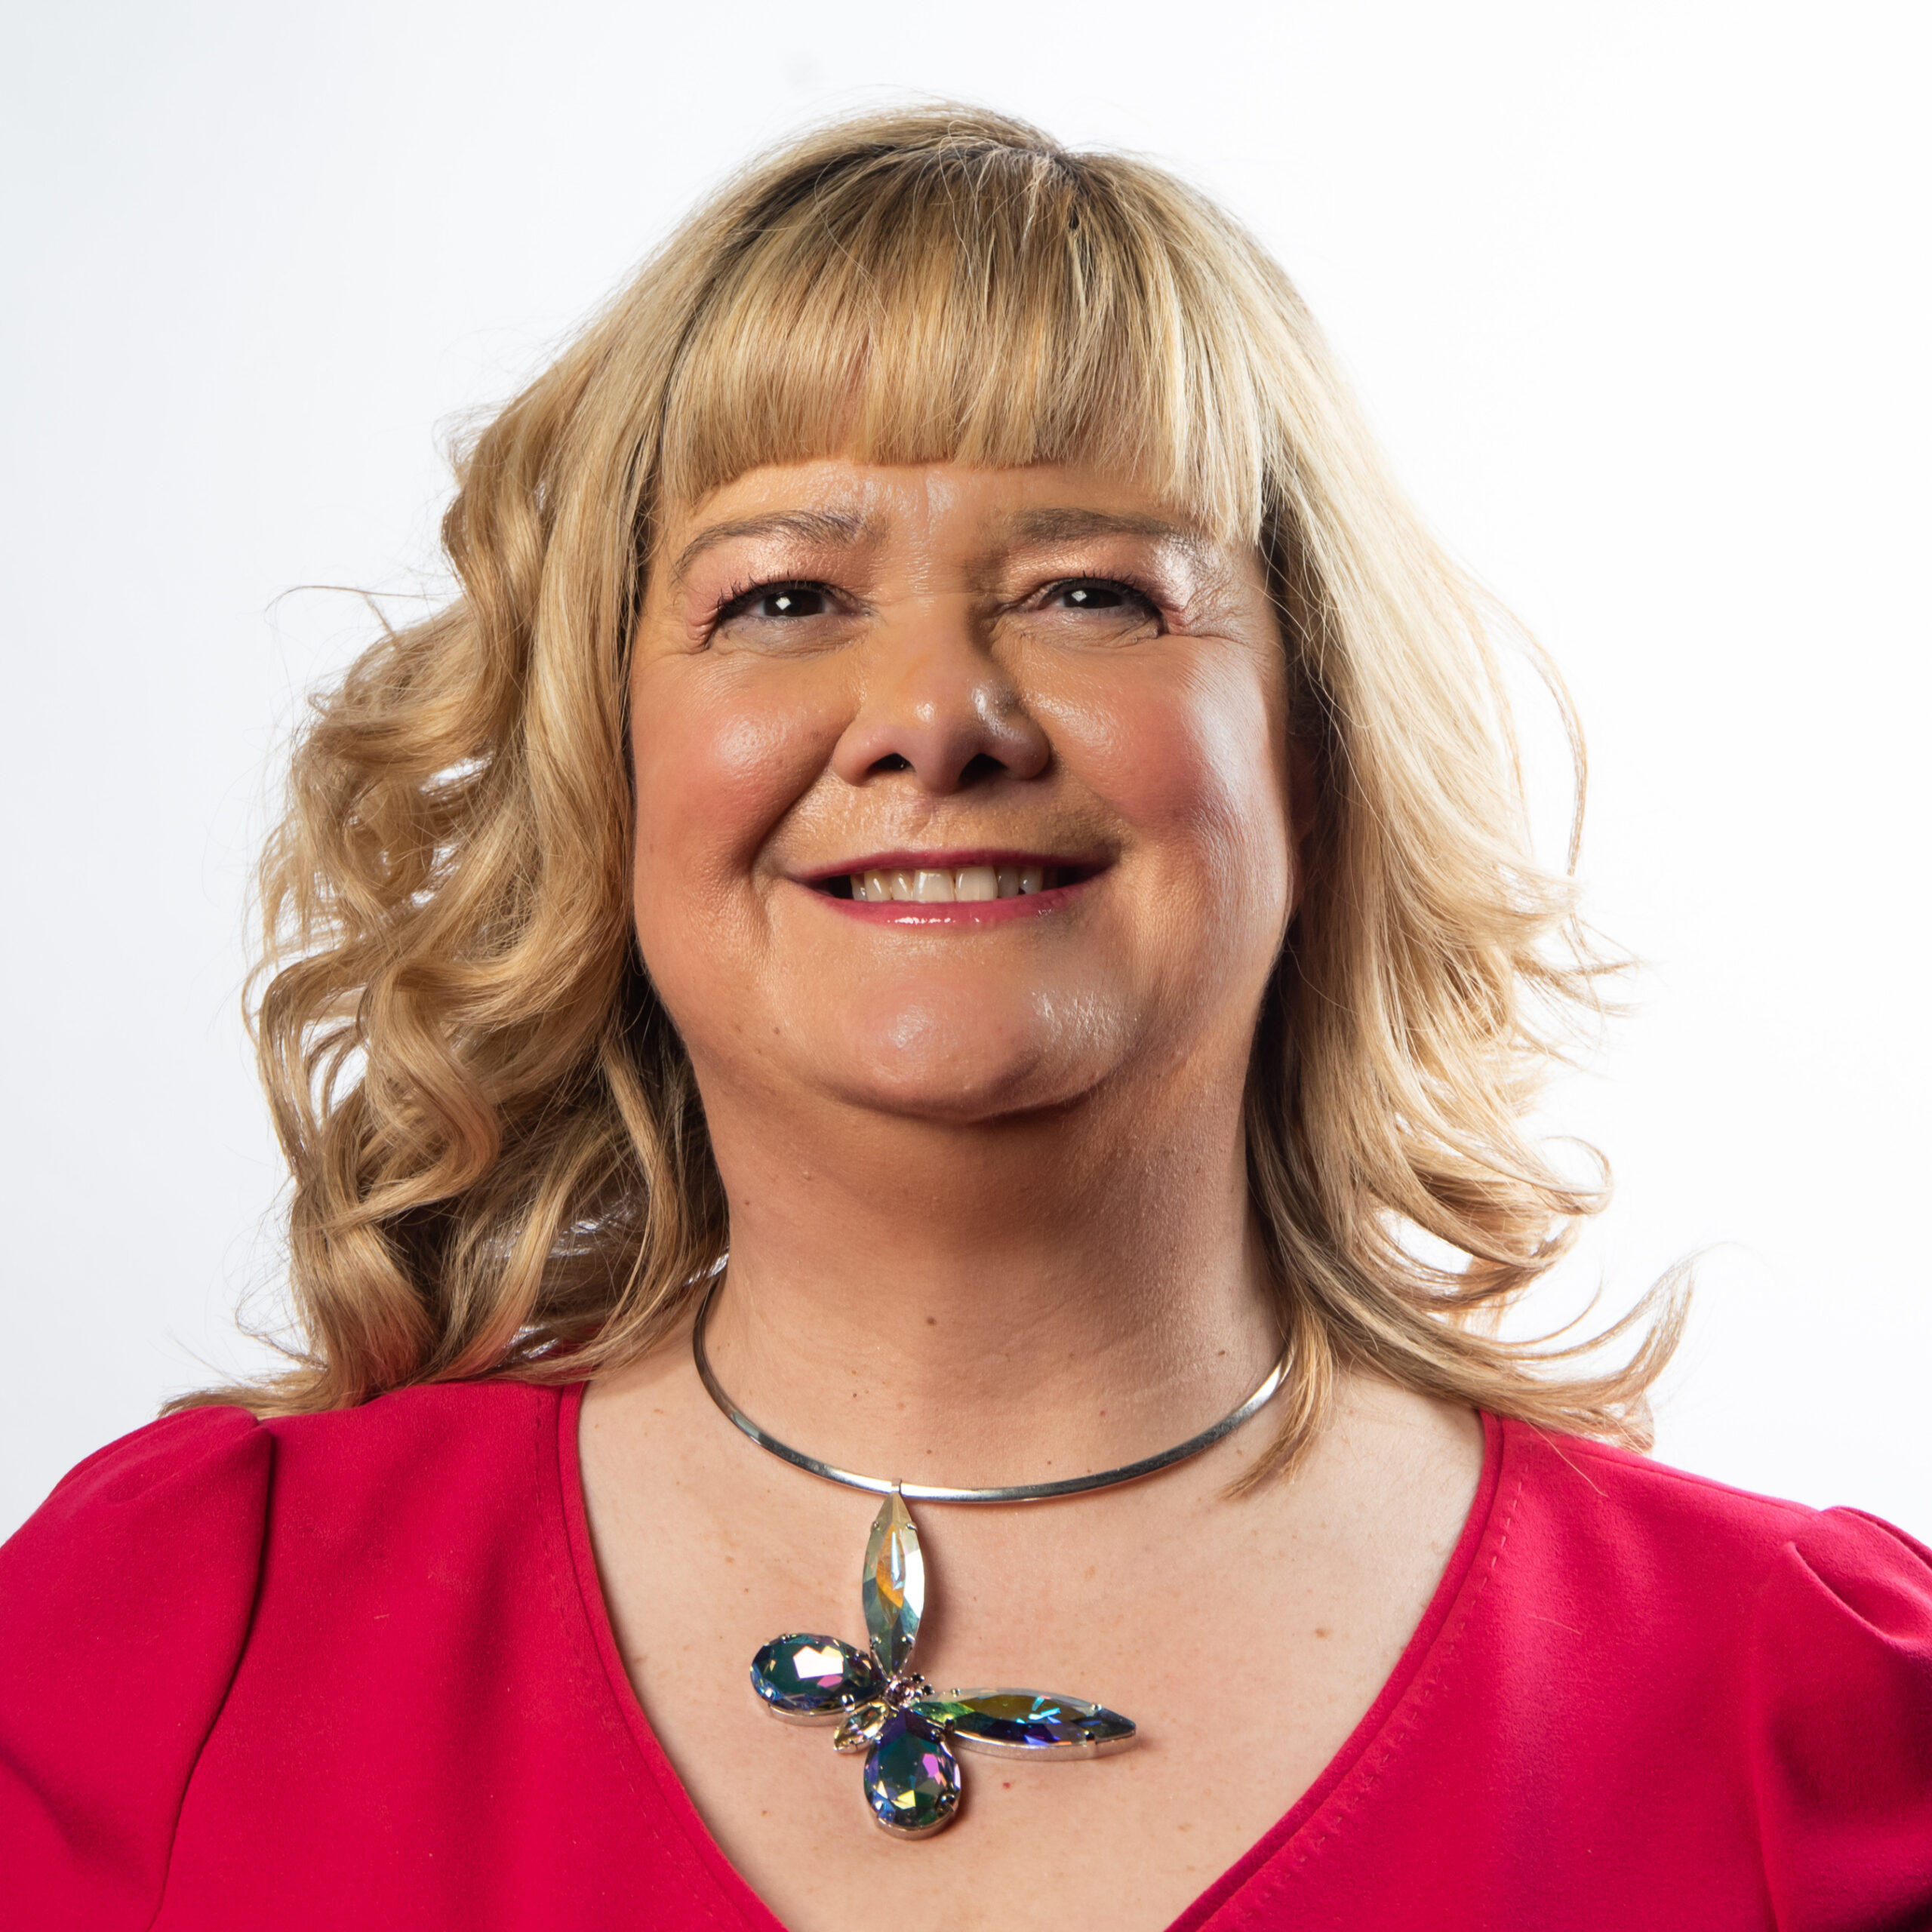 Fairstone financial adviser Carol Higgin-Jones